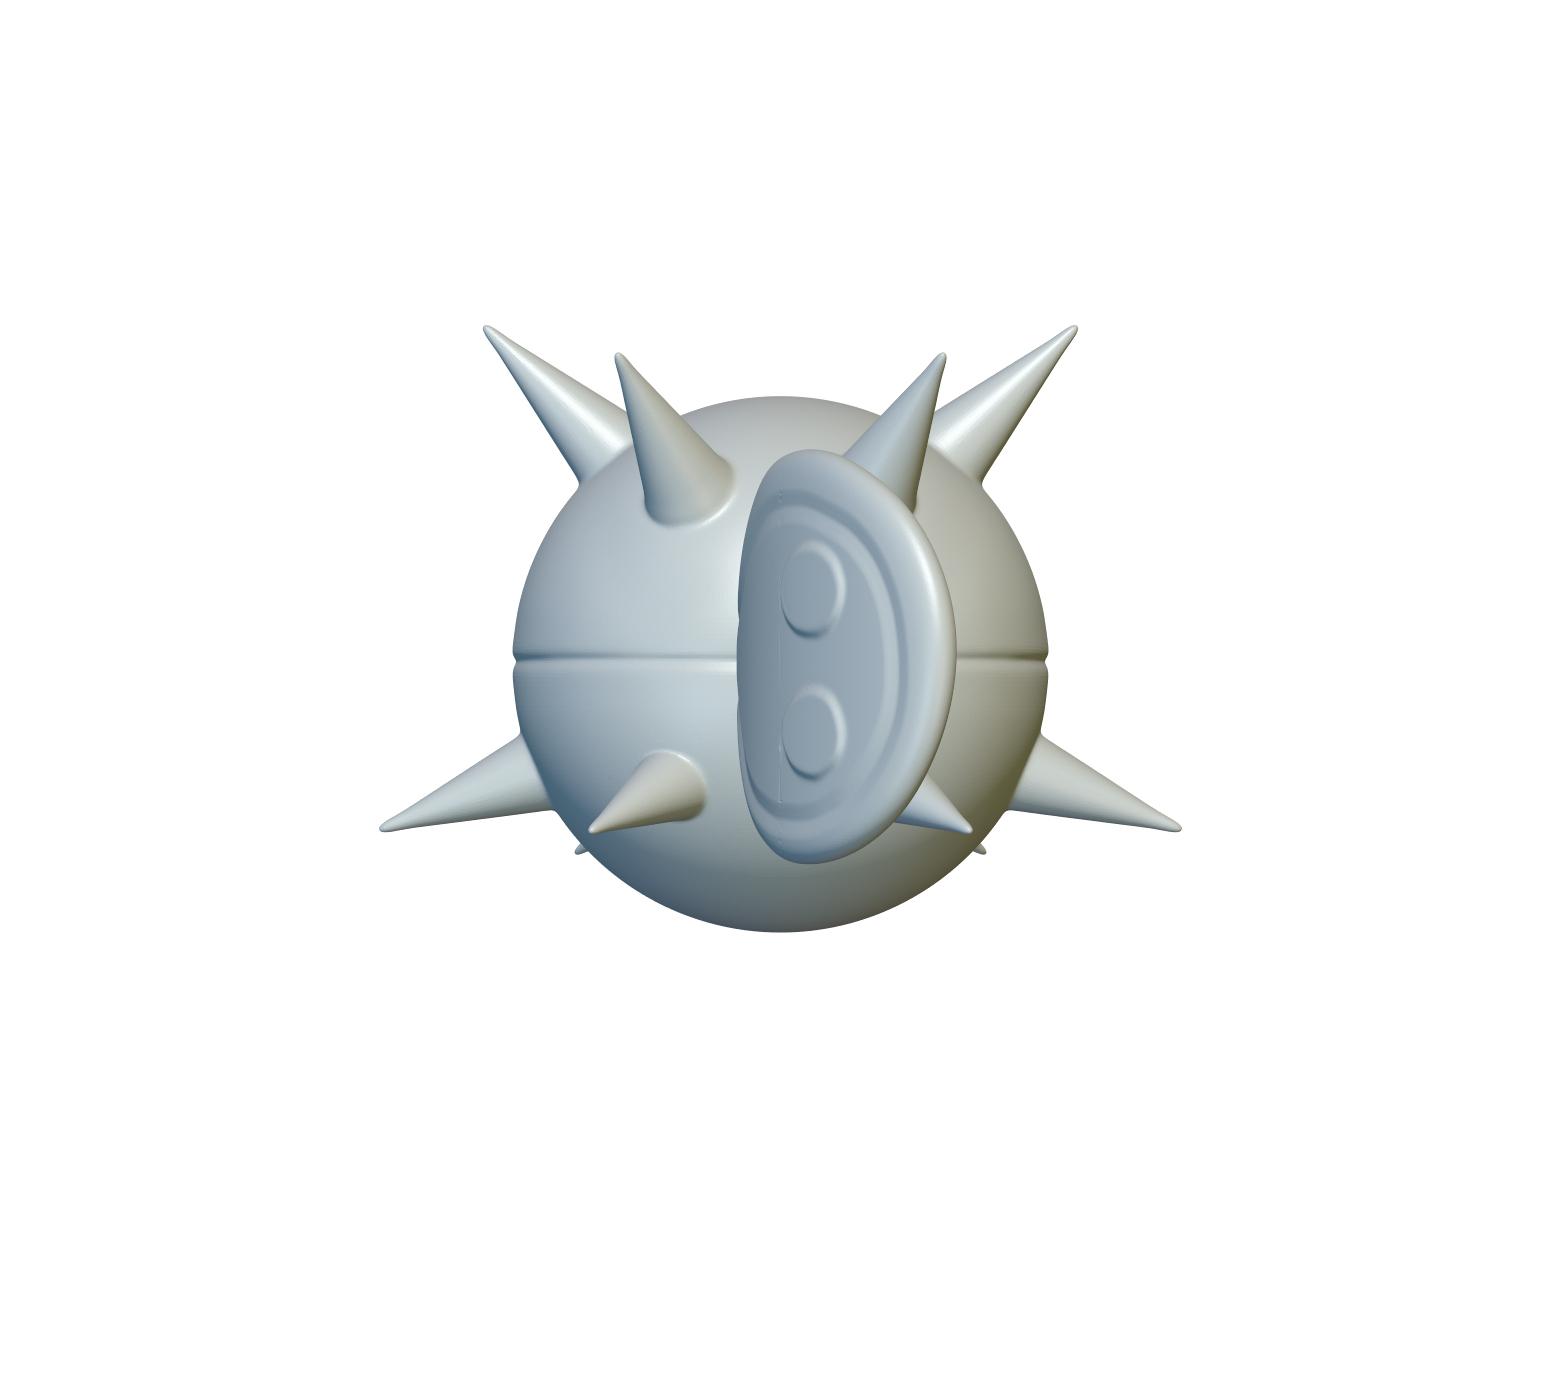 Pokemon Qwilfish #211 - Optimized for 3D Printing 3d model